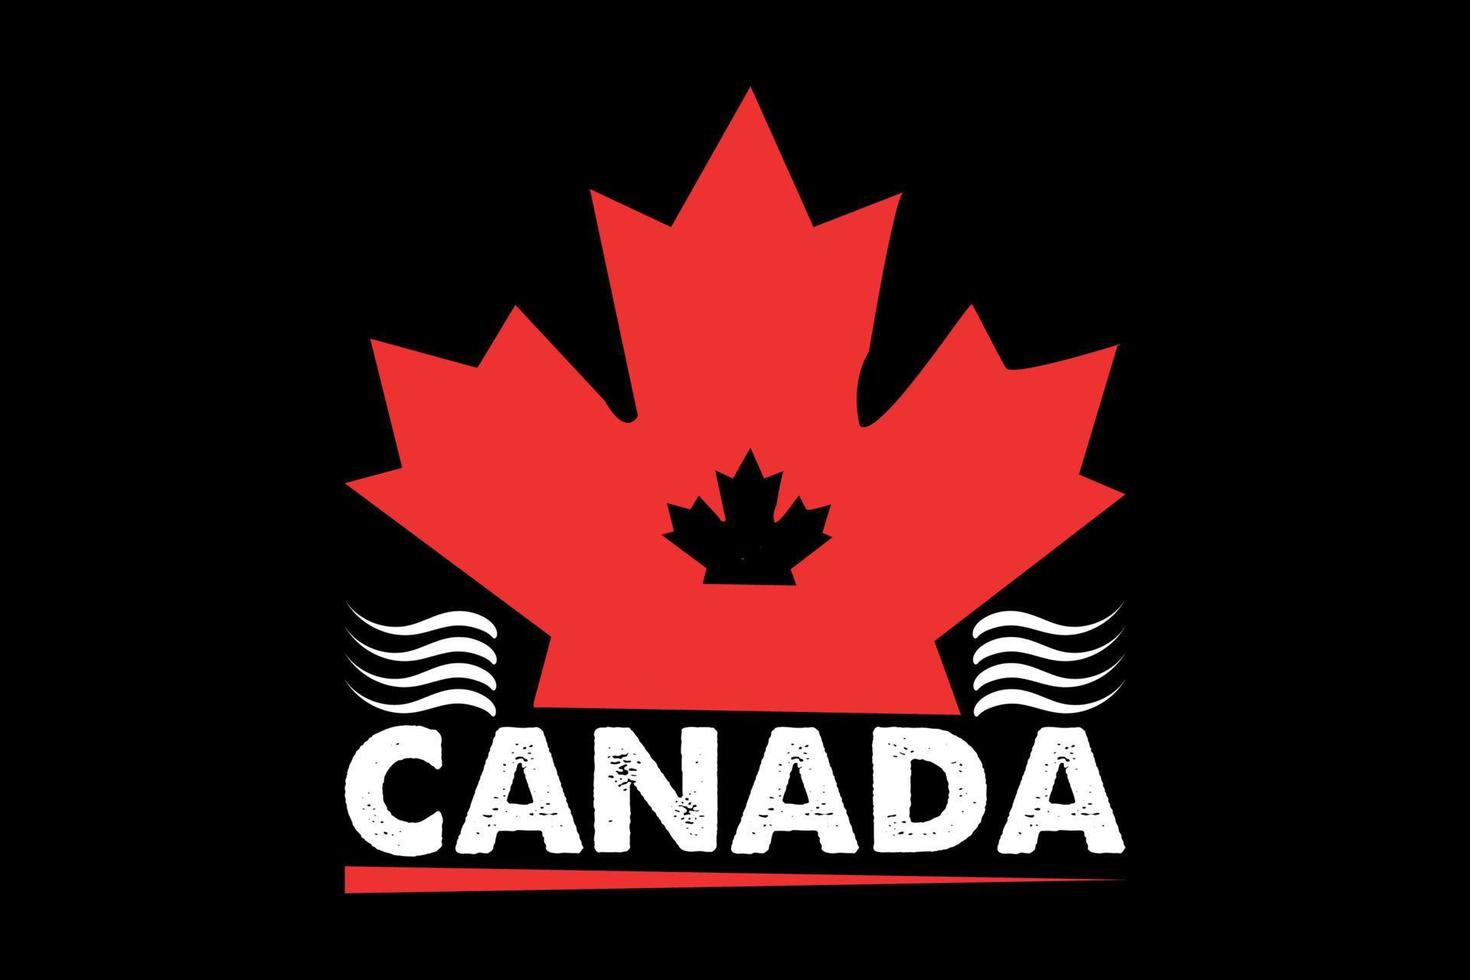 Canada, thanksgiving day t shirt design vector